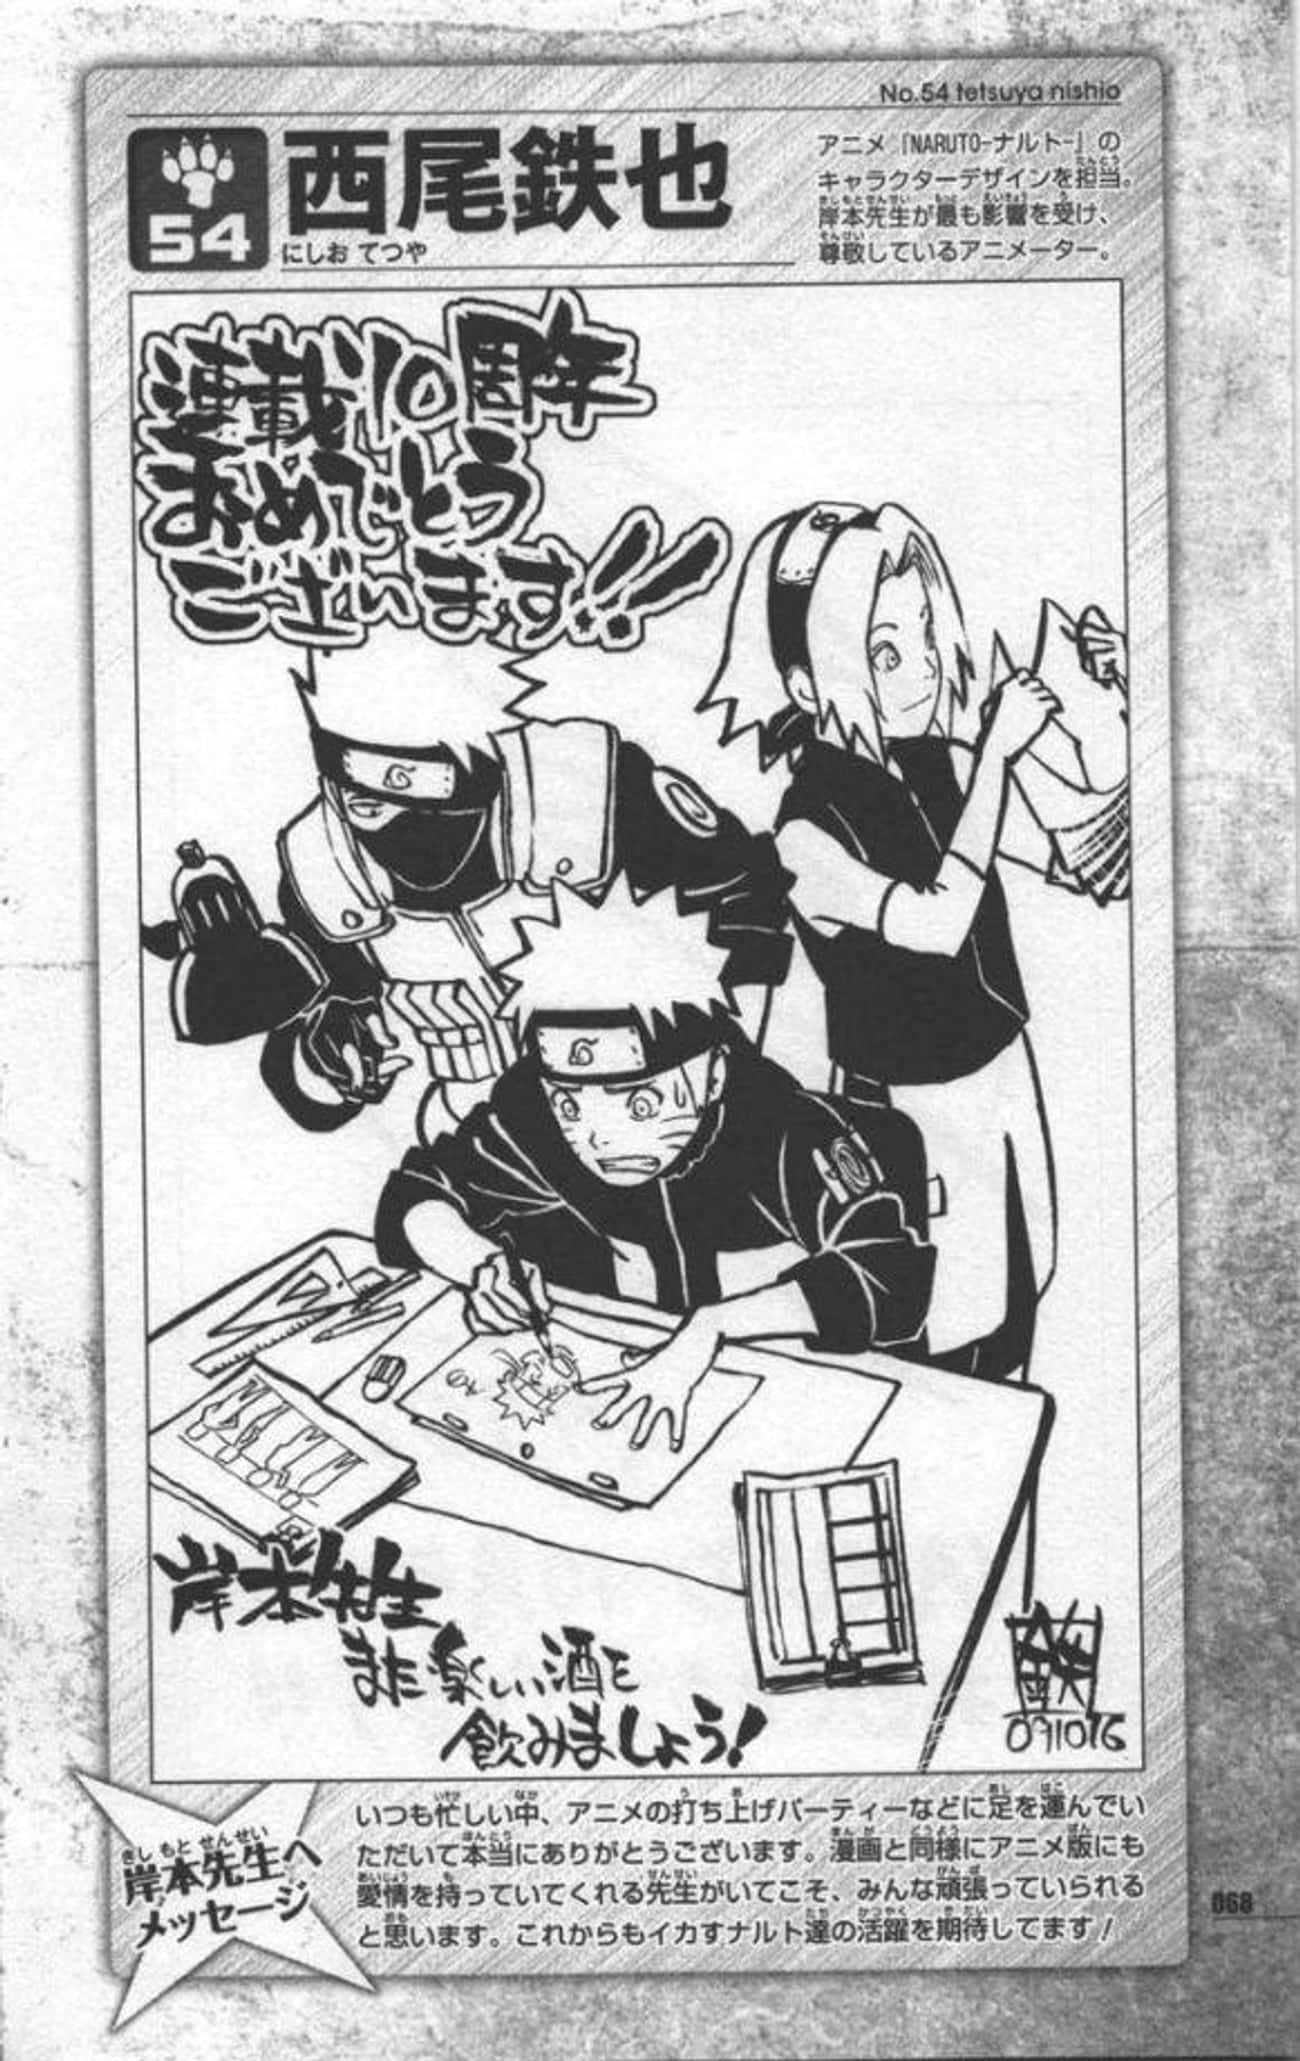 Tetsuya Nishio (Character Design For The Naruto Anime)